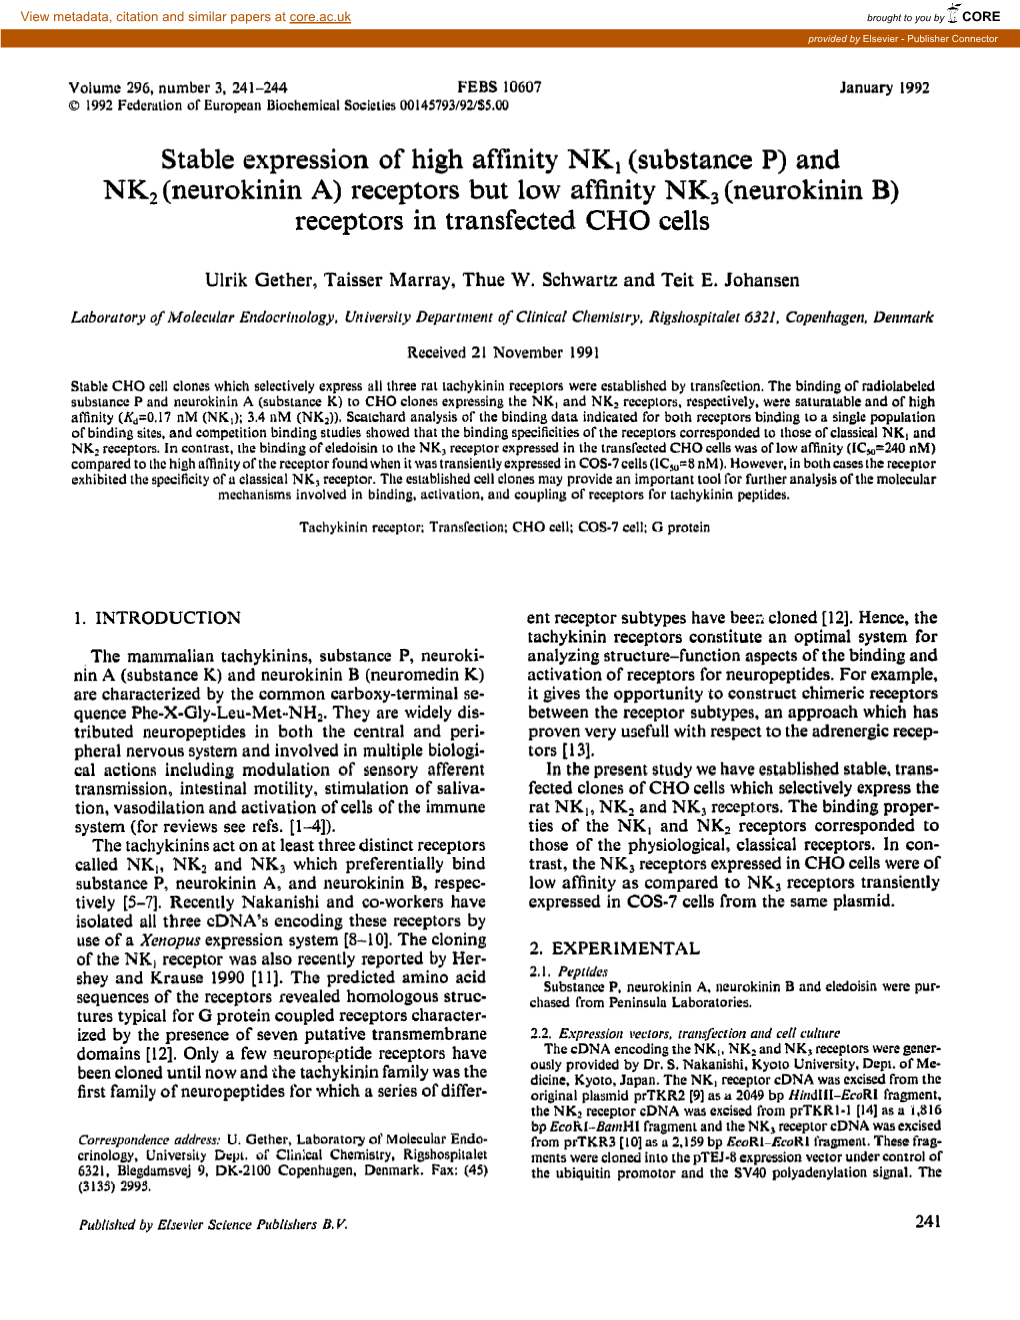 Substance P) and NK, (Neurokinin A) Receptors but Low Affinity NK3 (Neurokinin B) Receptors in Transfected CHO Cells